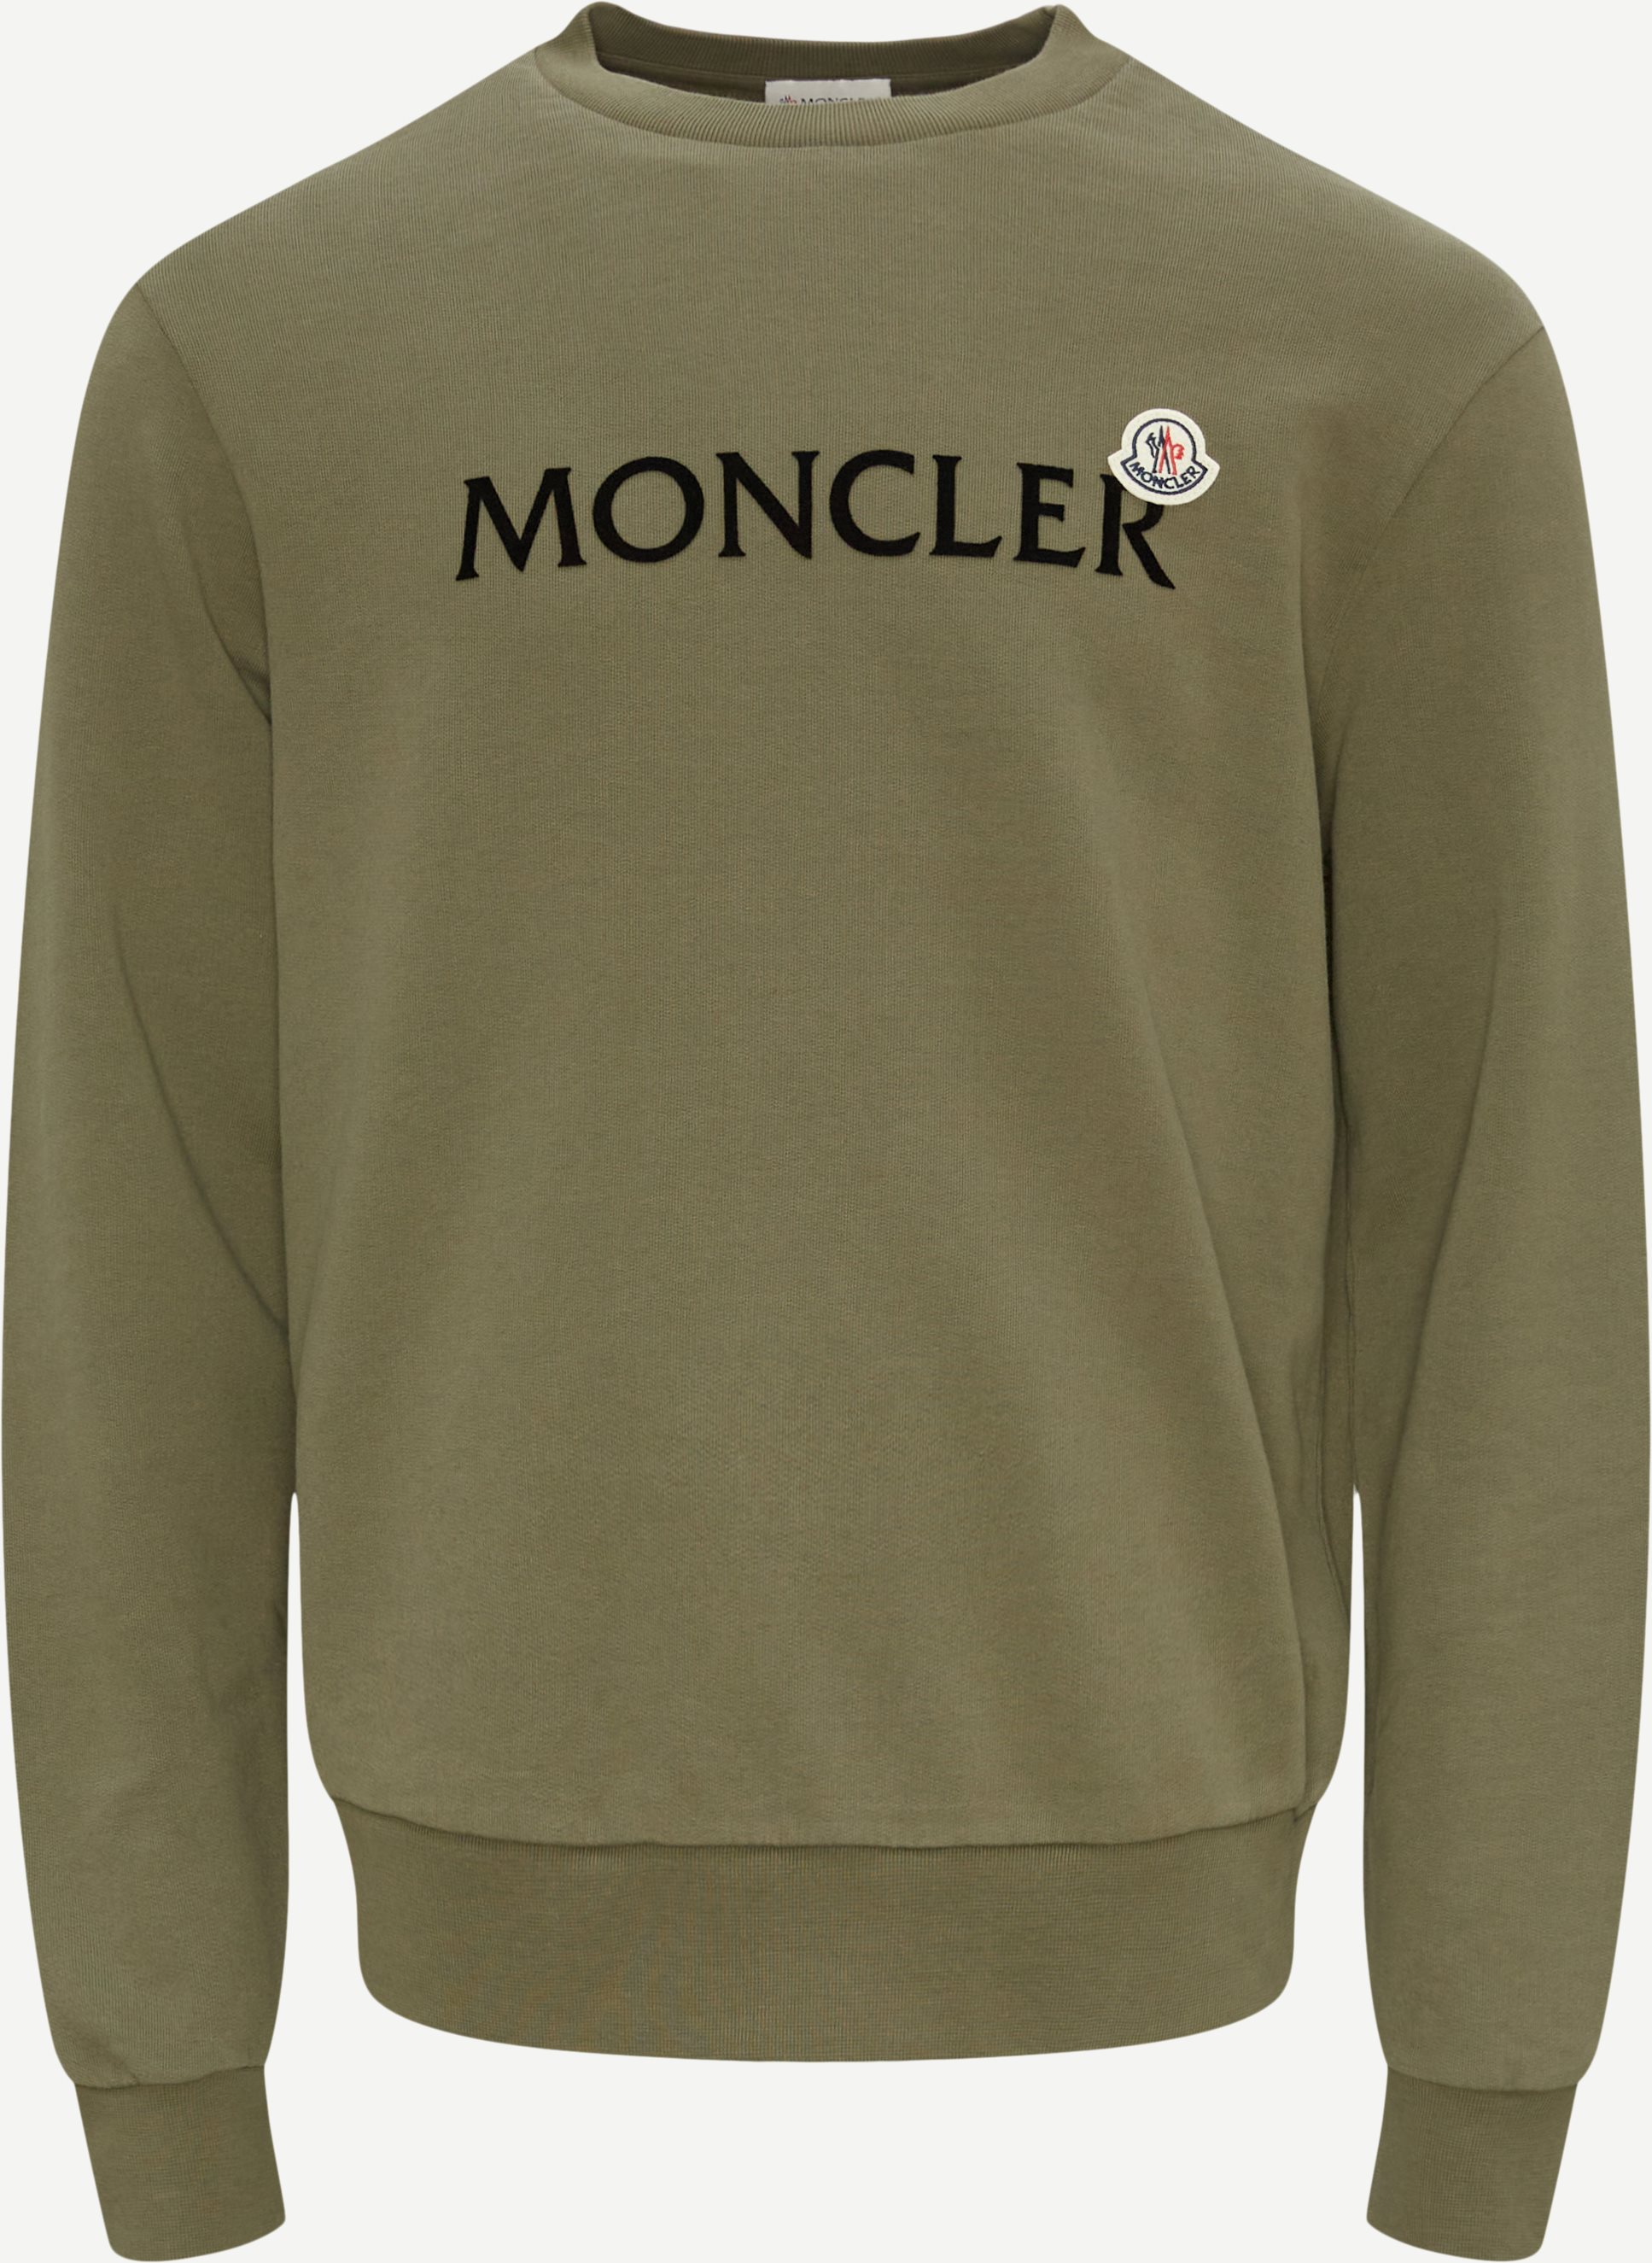 Moncler Sweatshirts 8G00048 809KR 2303 Army